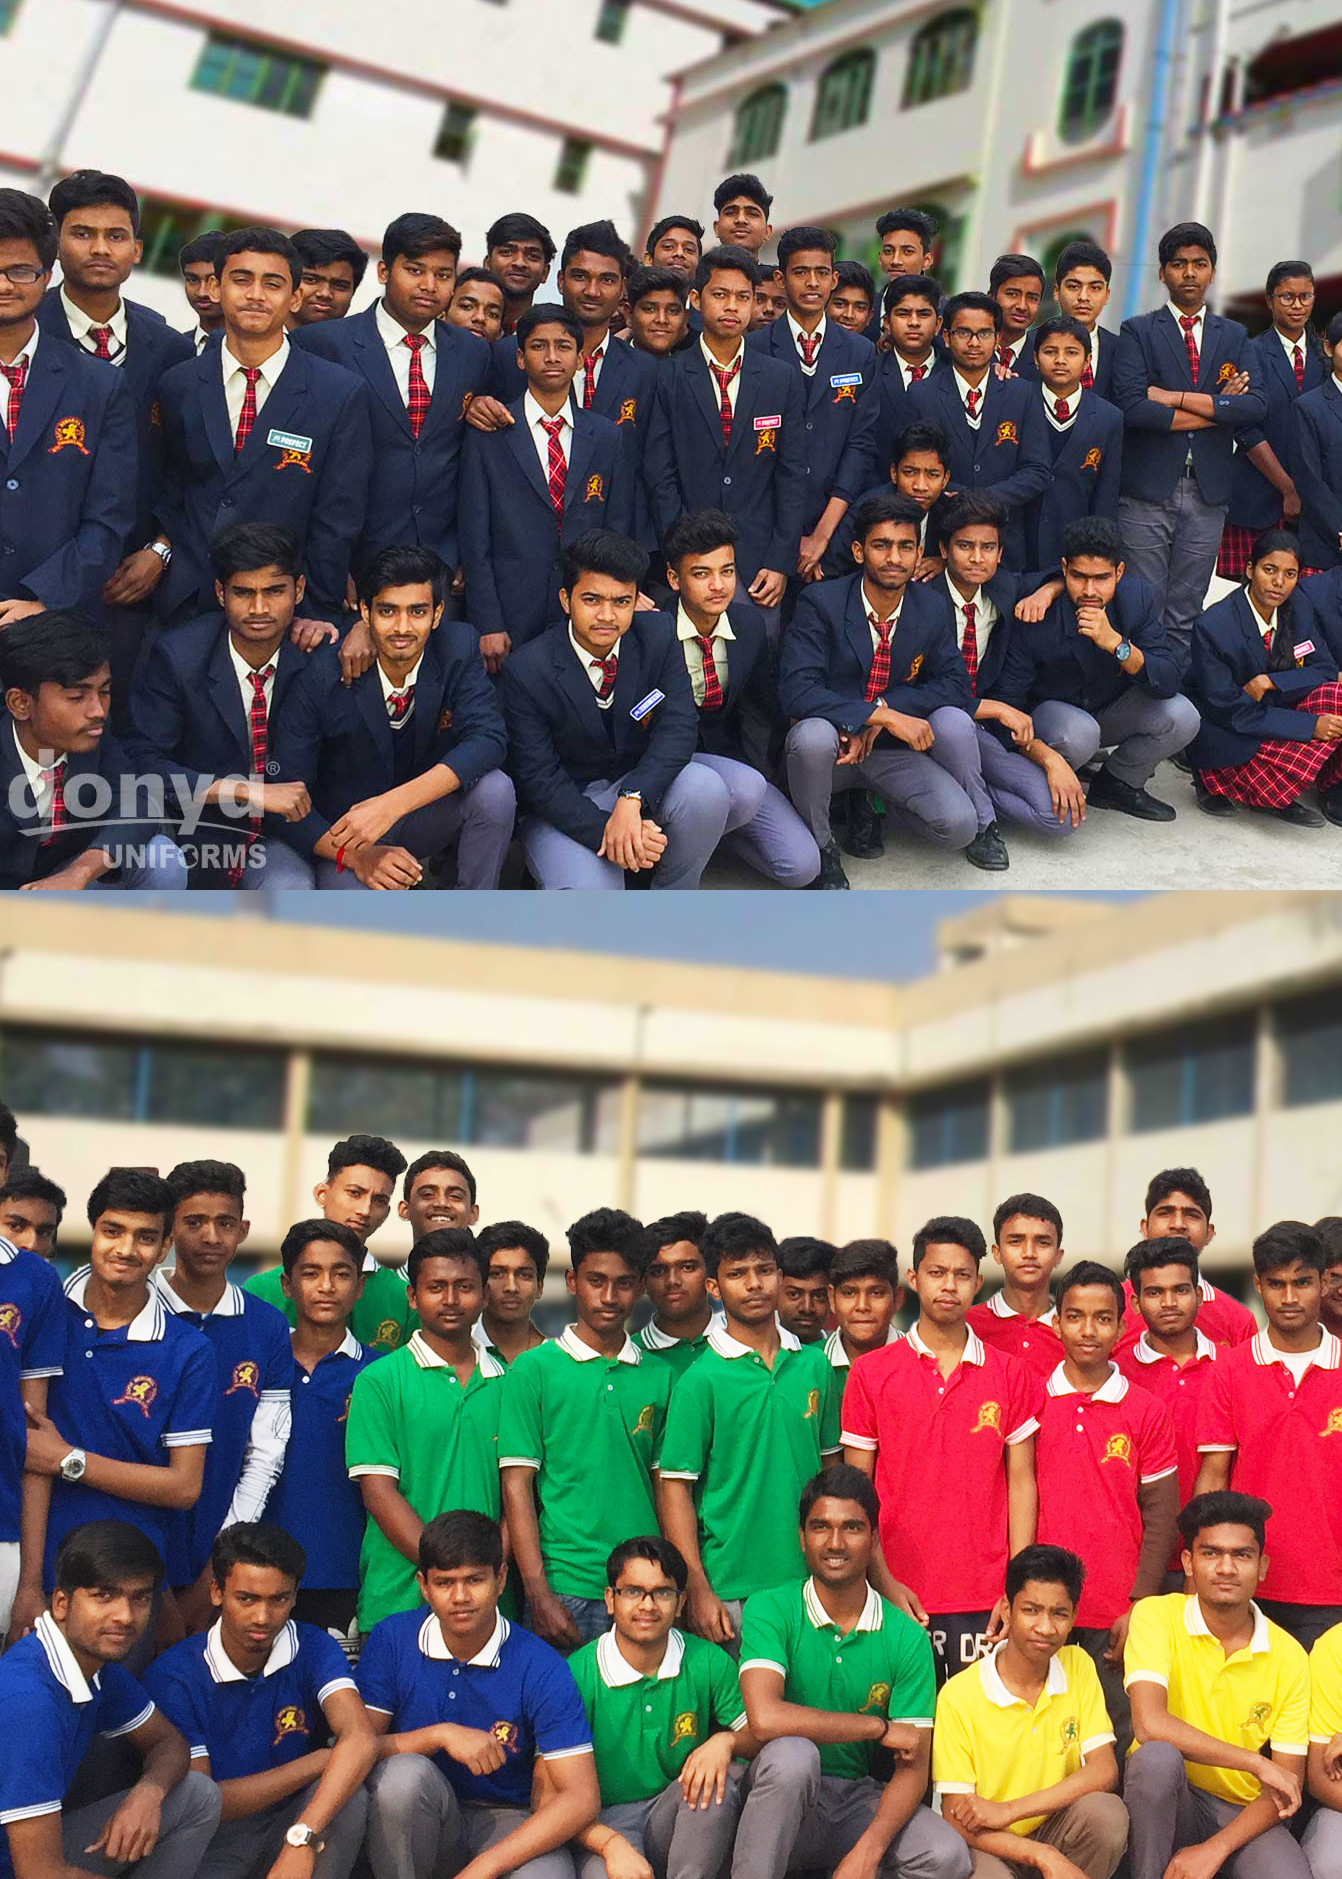 School Uniform House T Shirt in India, West Bengal, Kolkata, Delhi, Mumbai, Siliguri, Malda,